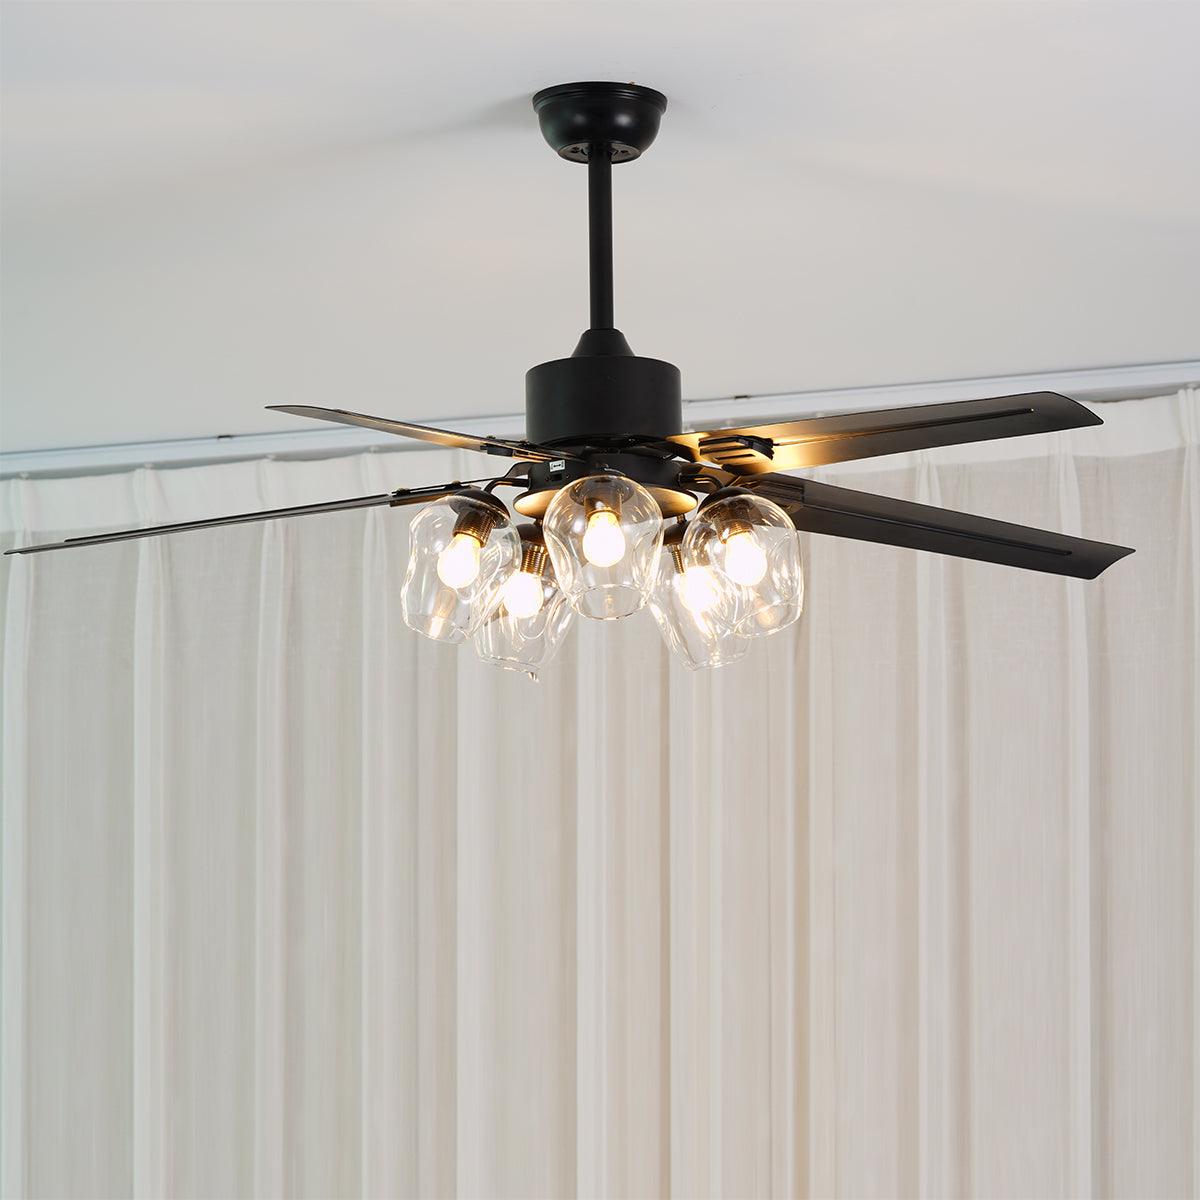 Black Vintage Ceiling Fan Vakkerlight